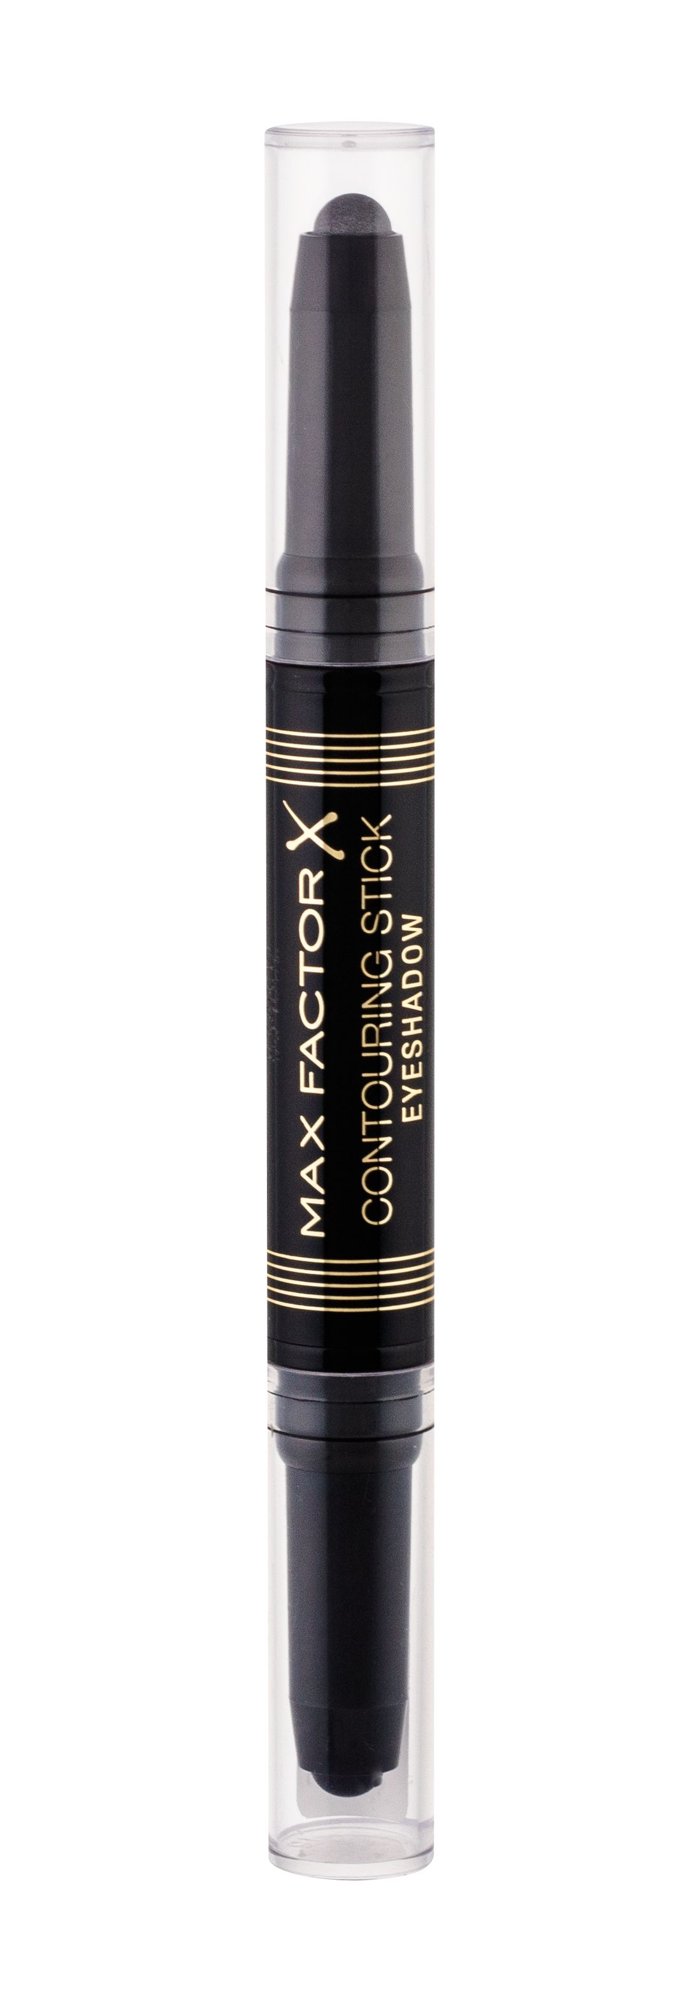 Max Factor Contouring Stick Eyeshadow